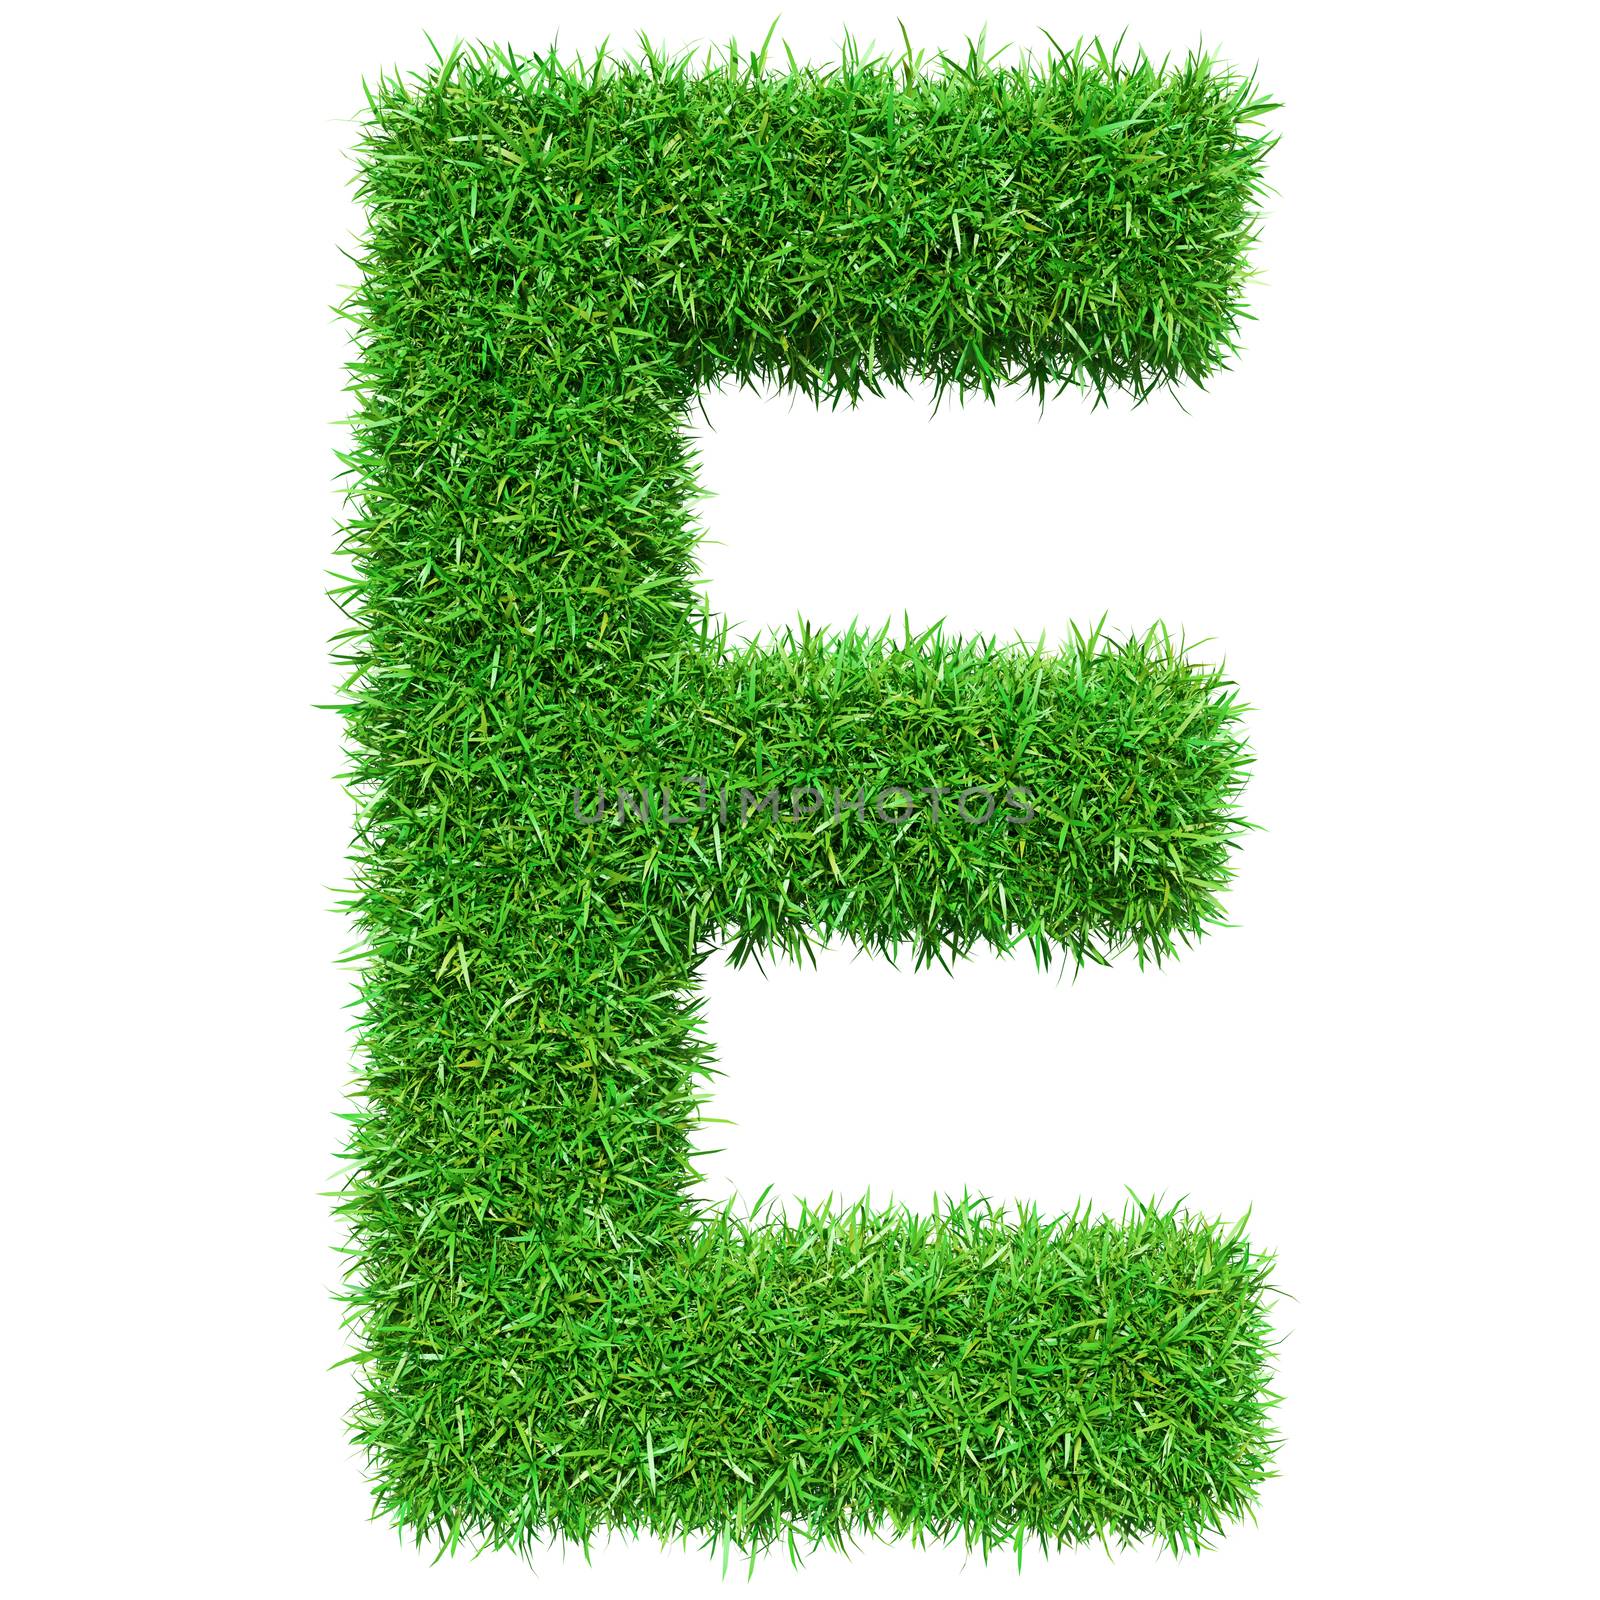 Green Grass Letter E by cherezoff